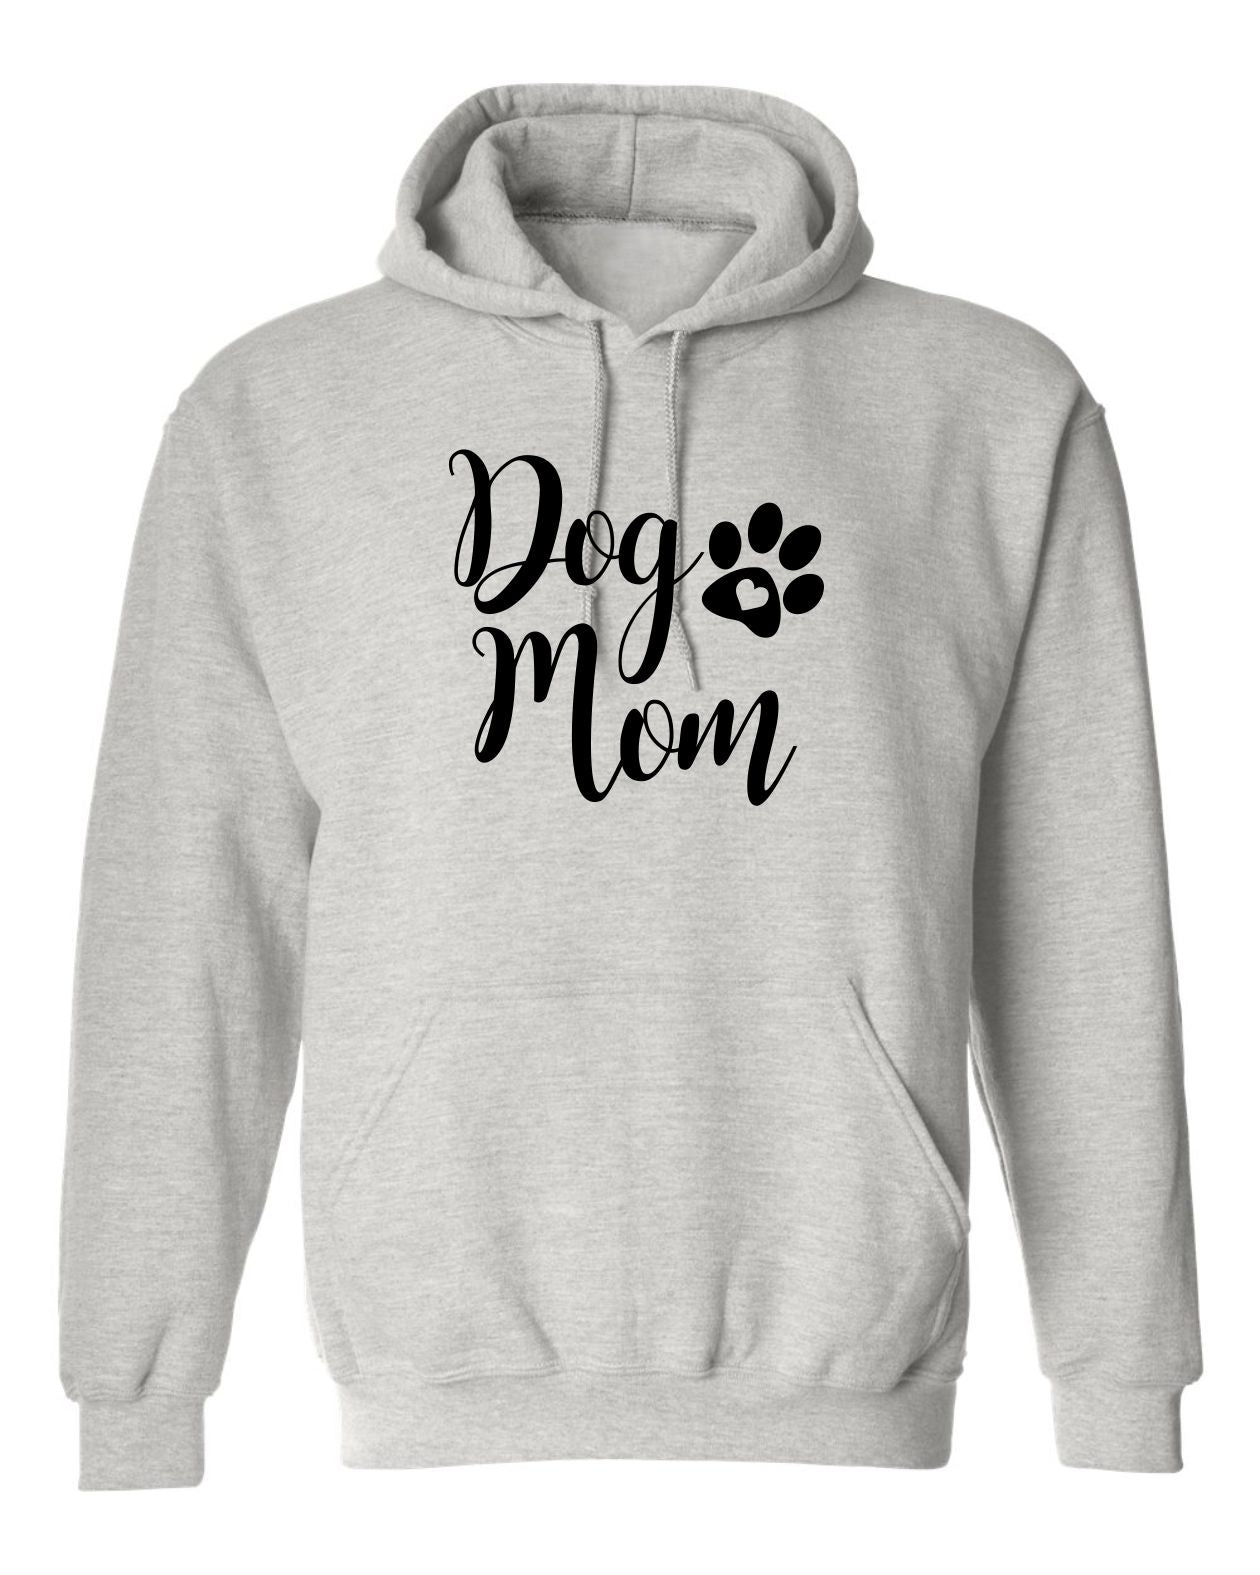 "Dog Mom" Unisex Hoodie